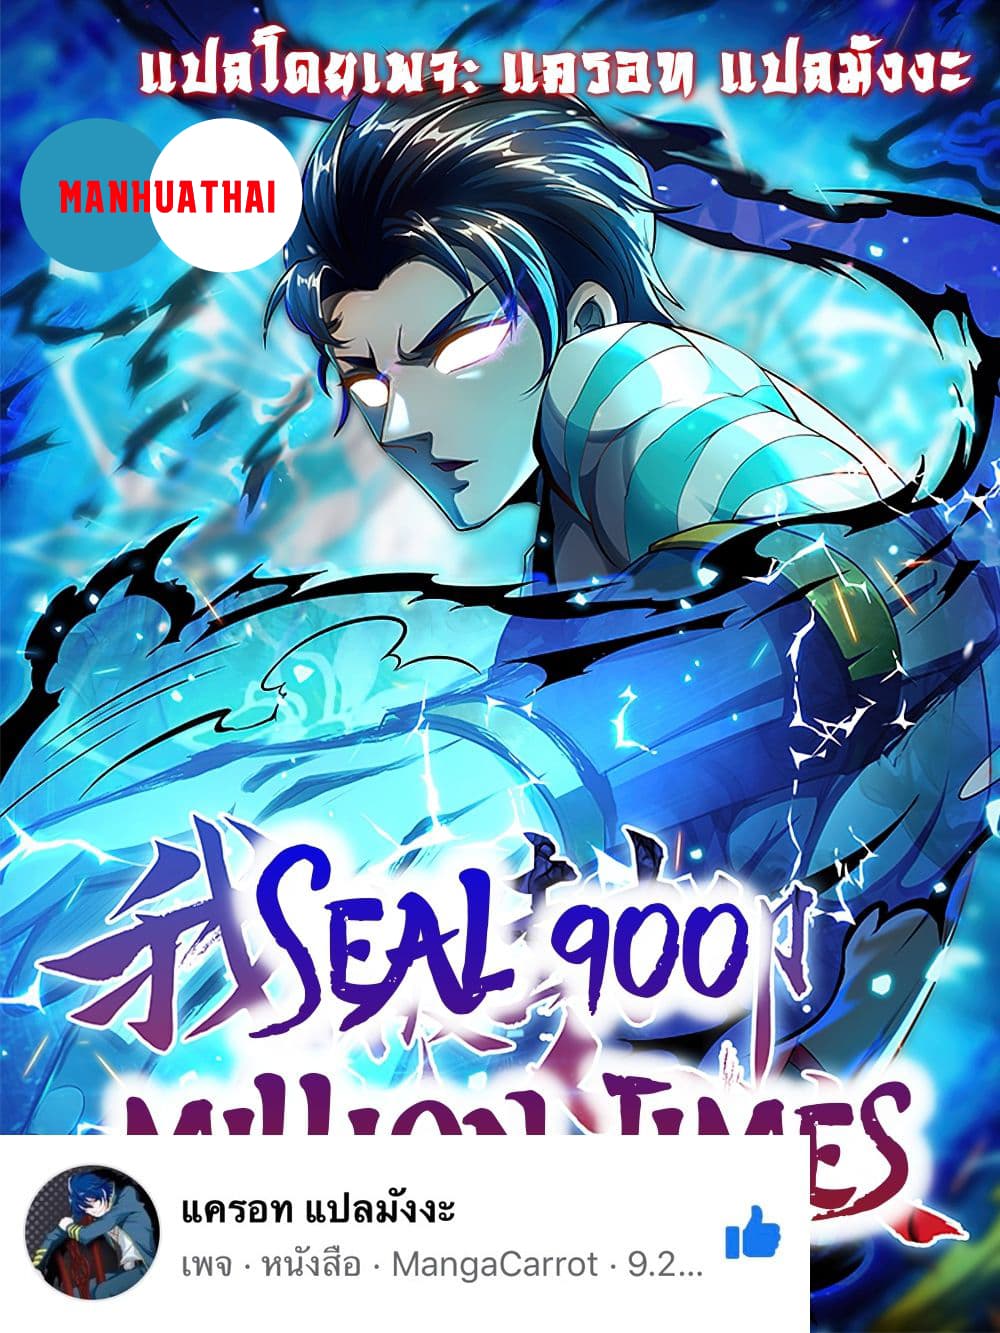 Seal 900 Million Times 18-18